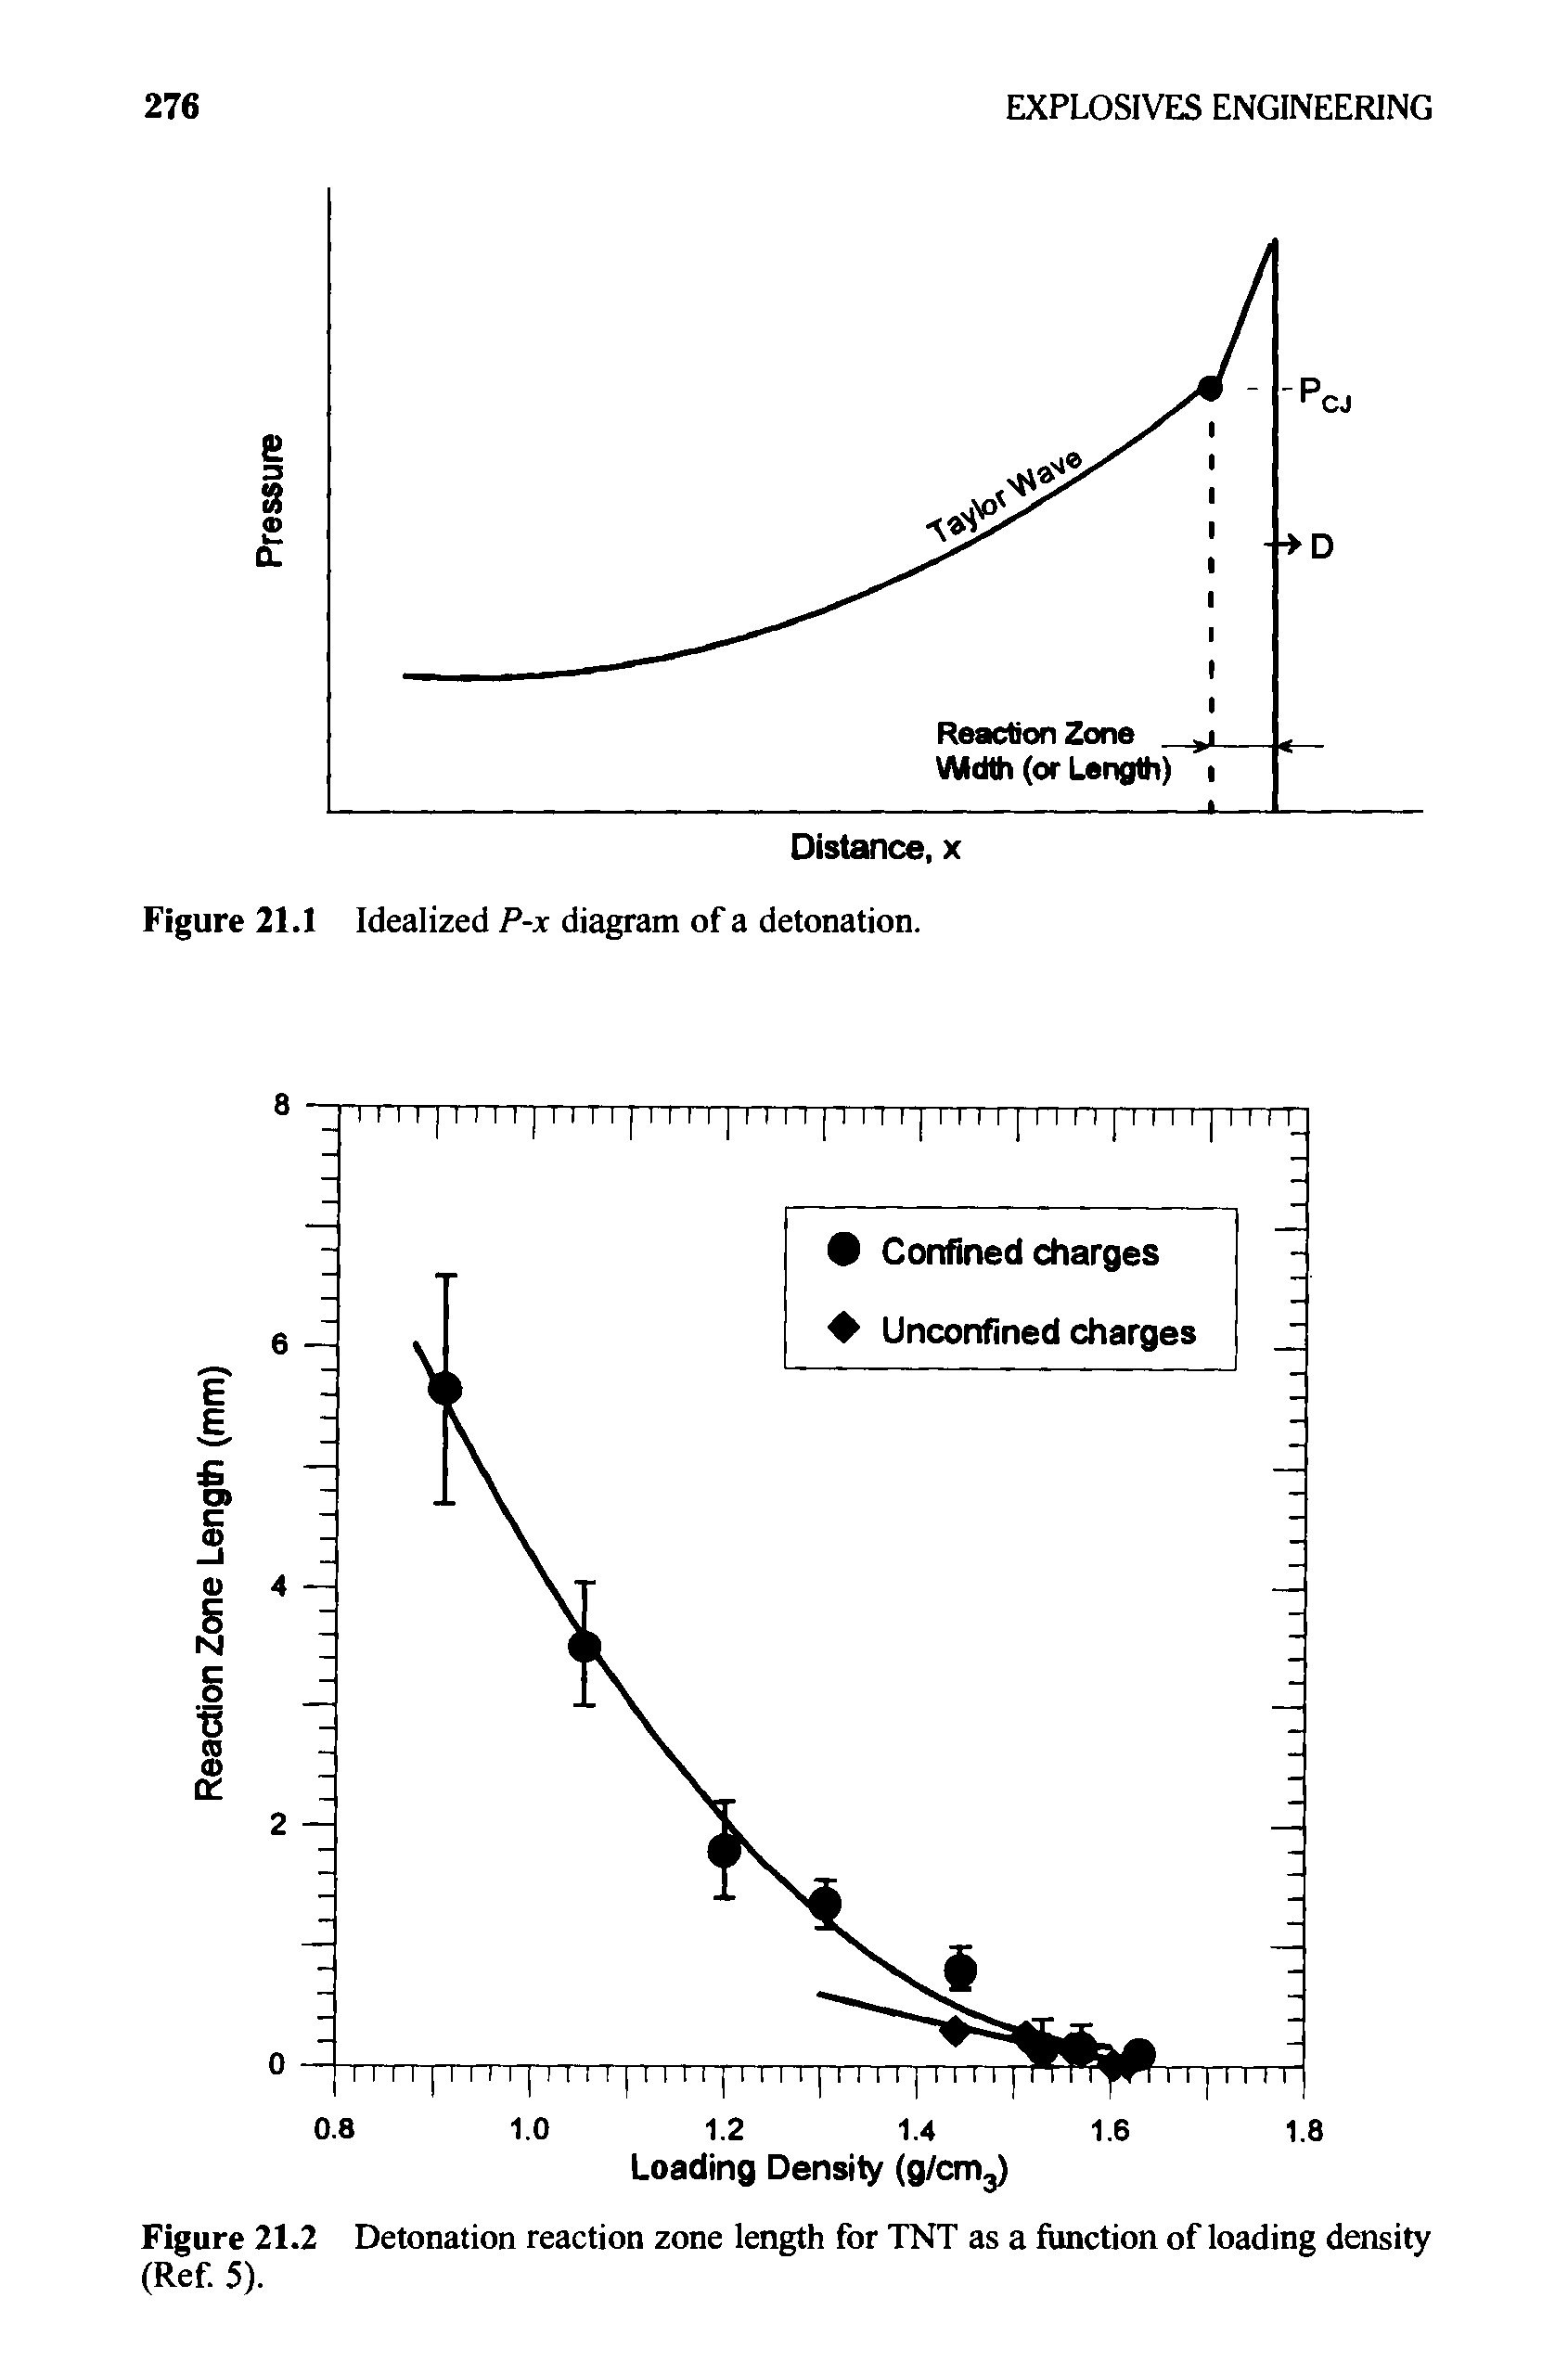 Figure 21.2 Detonation reaction zone length for TNT as a function of loading density (Ref 5).